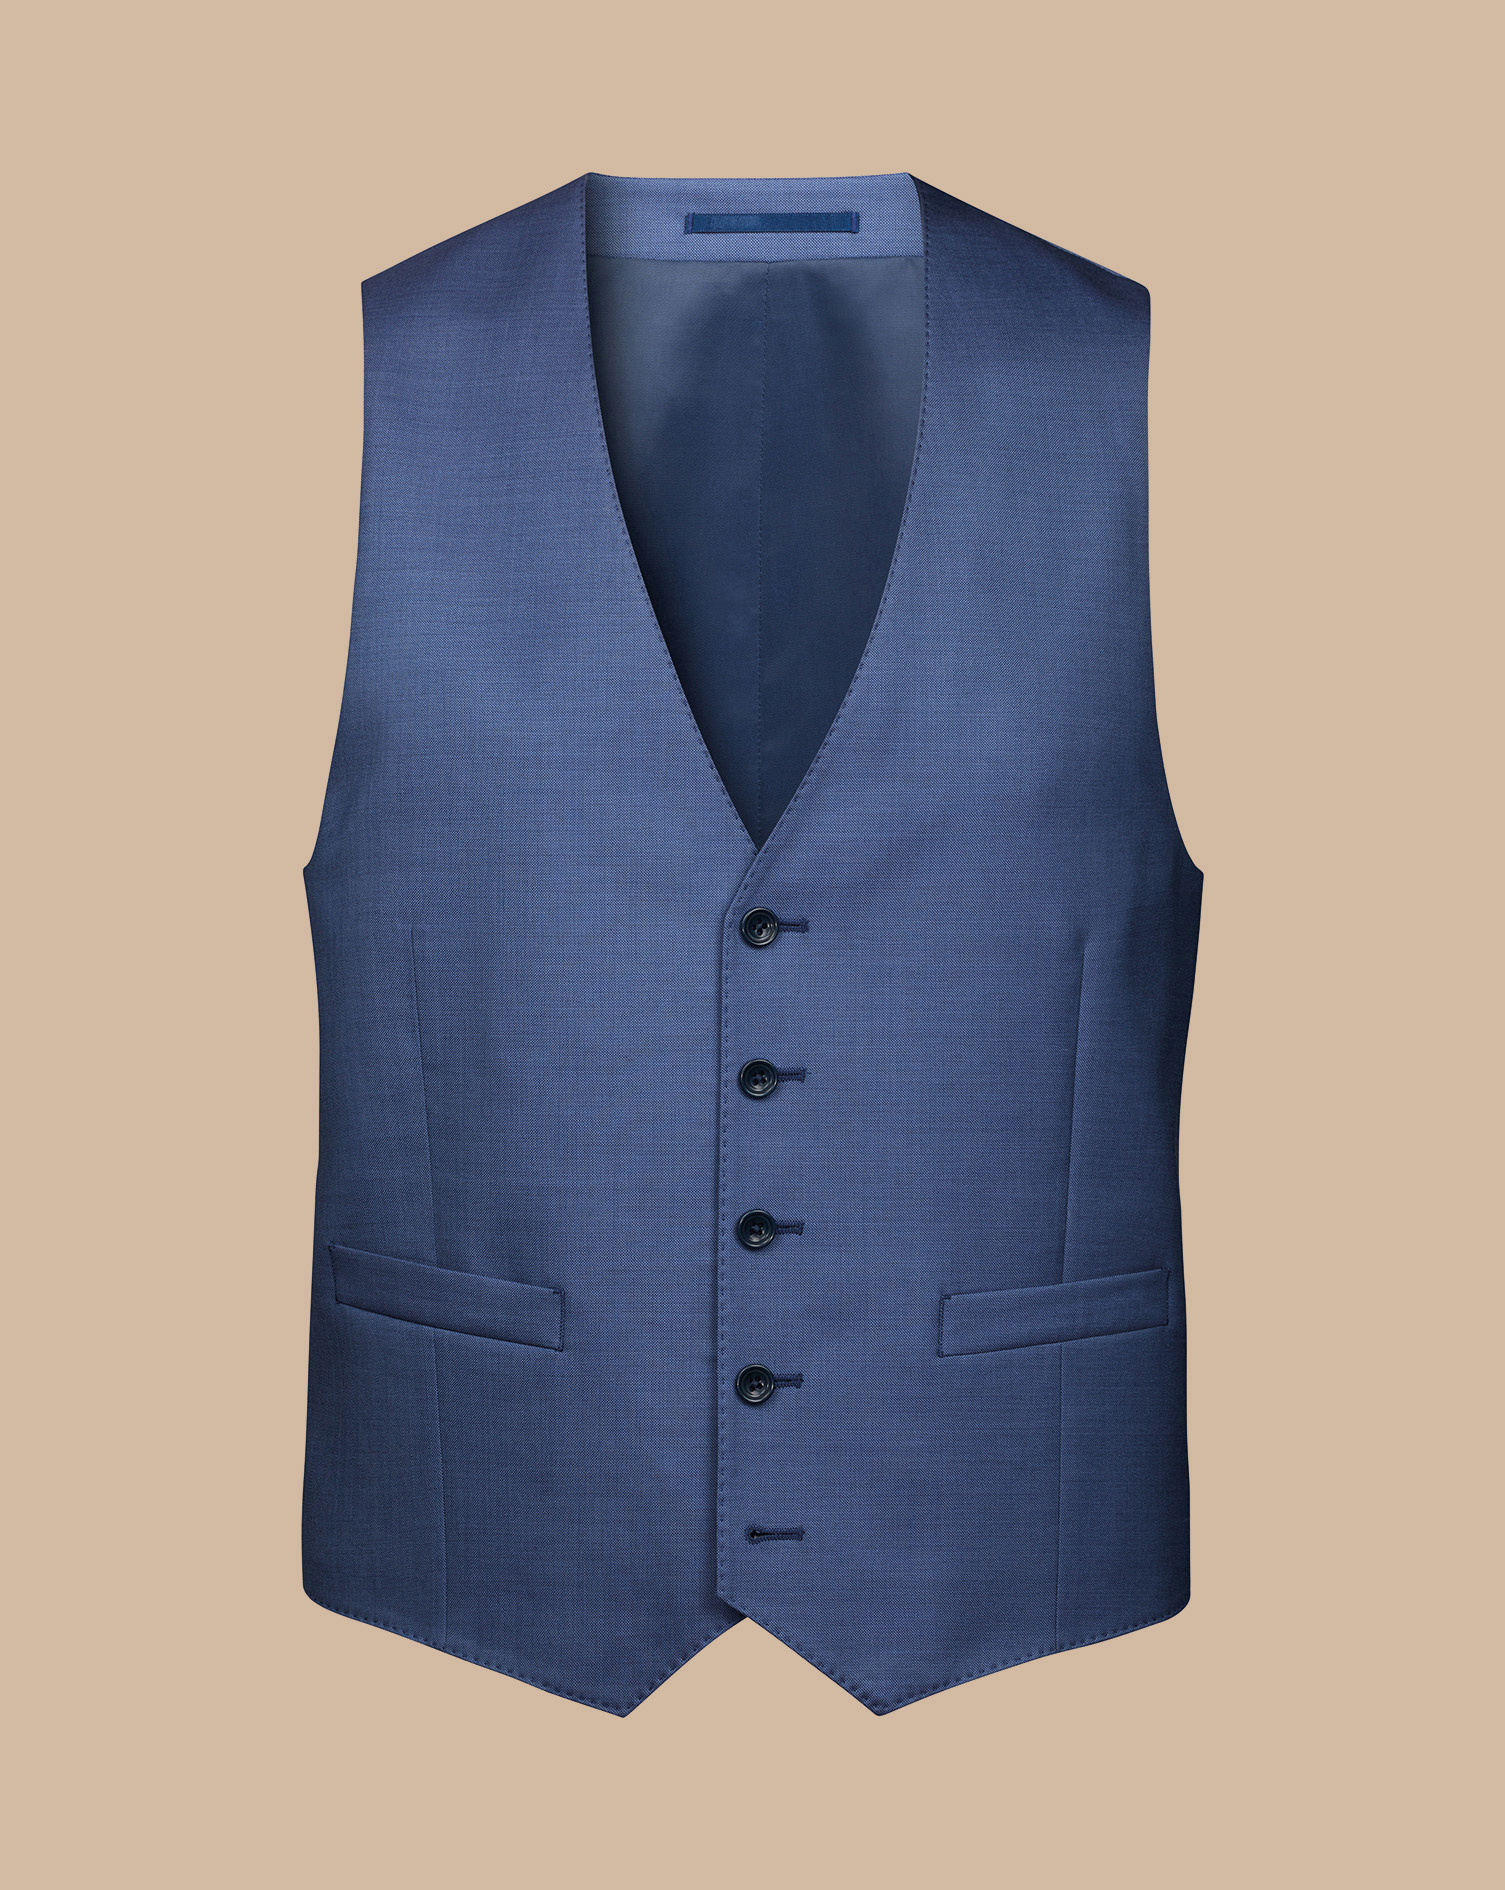 Men's Charles Tyrwhitt Ultimate Performance Sharkskin Suit Waistcoat - Indigo Blue Size w40 Wool
